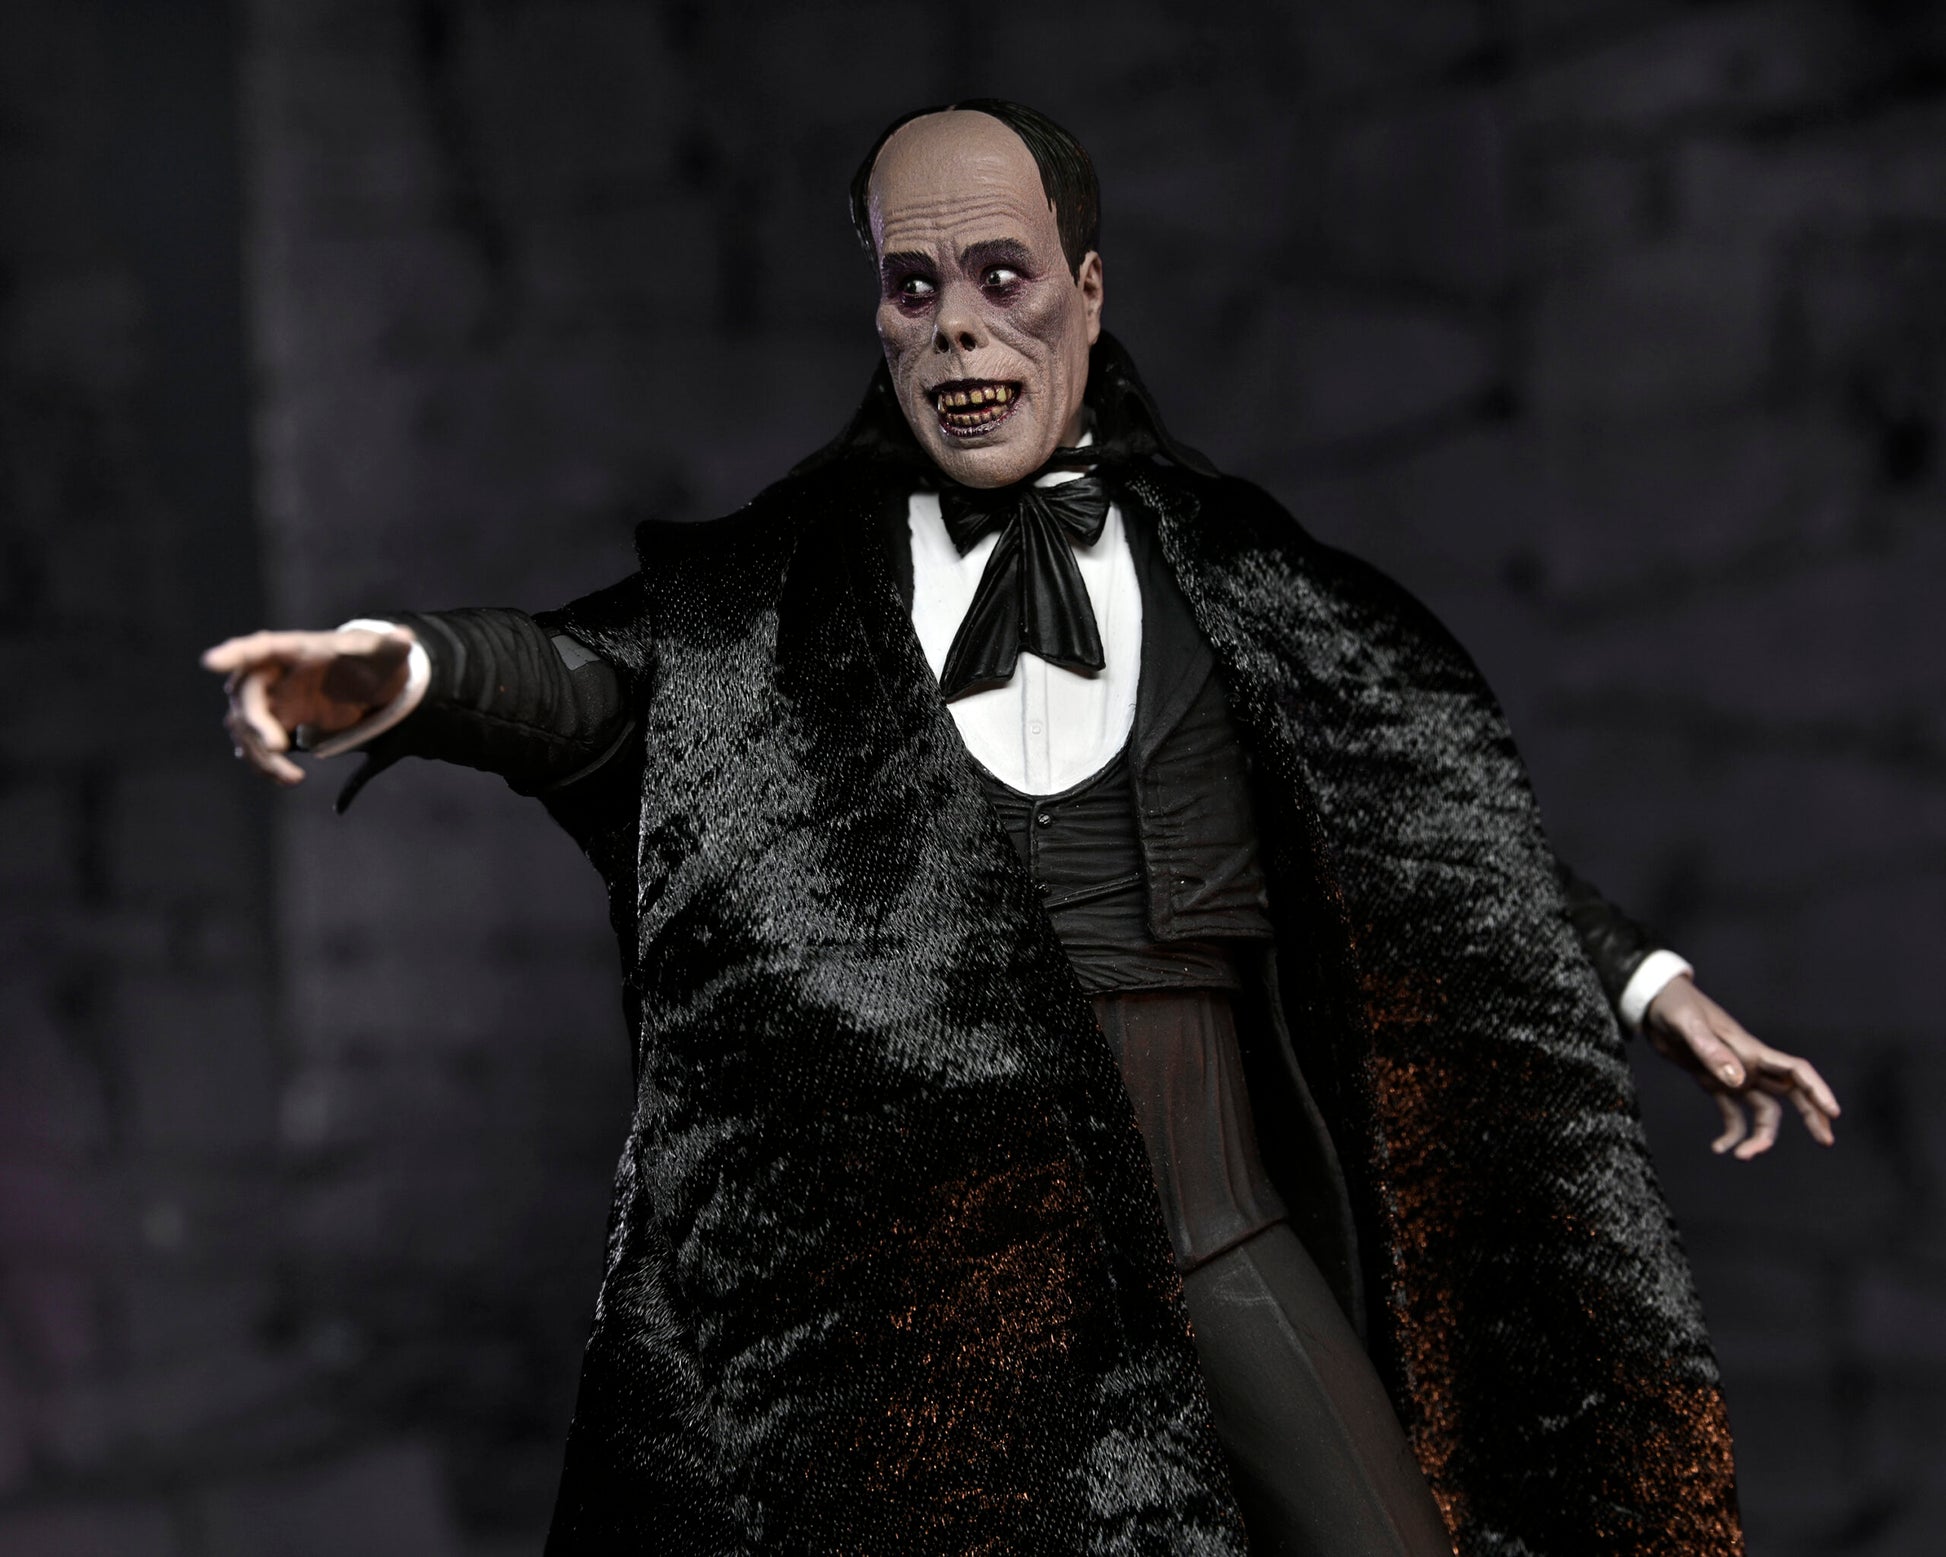 Phantom of the Opera Ultimate action figure